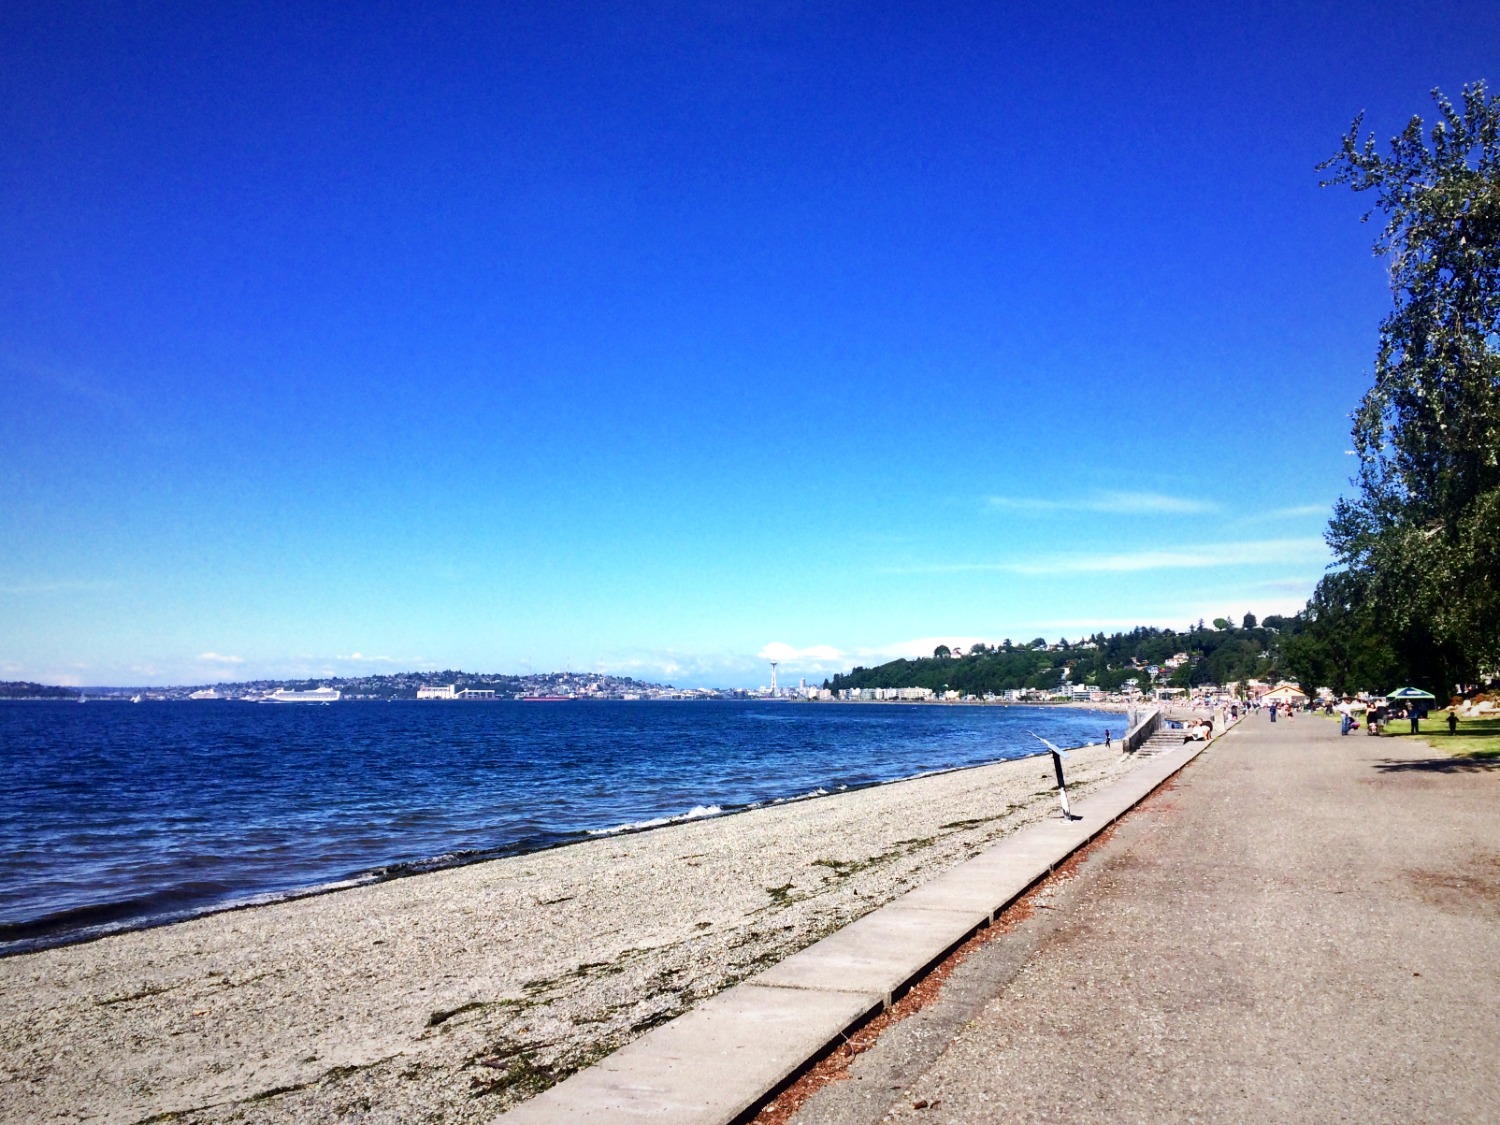 Summer in Seattle #Alki Beach Park